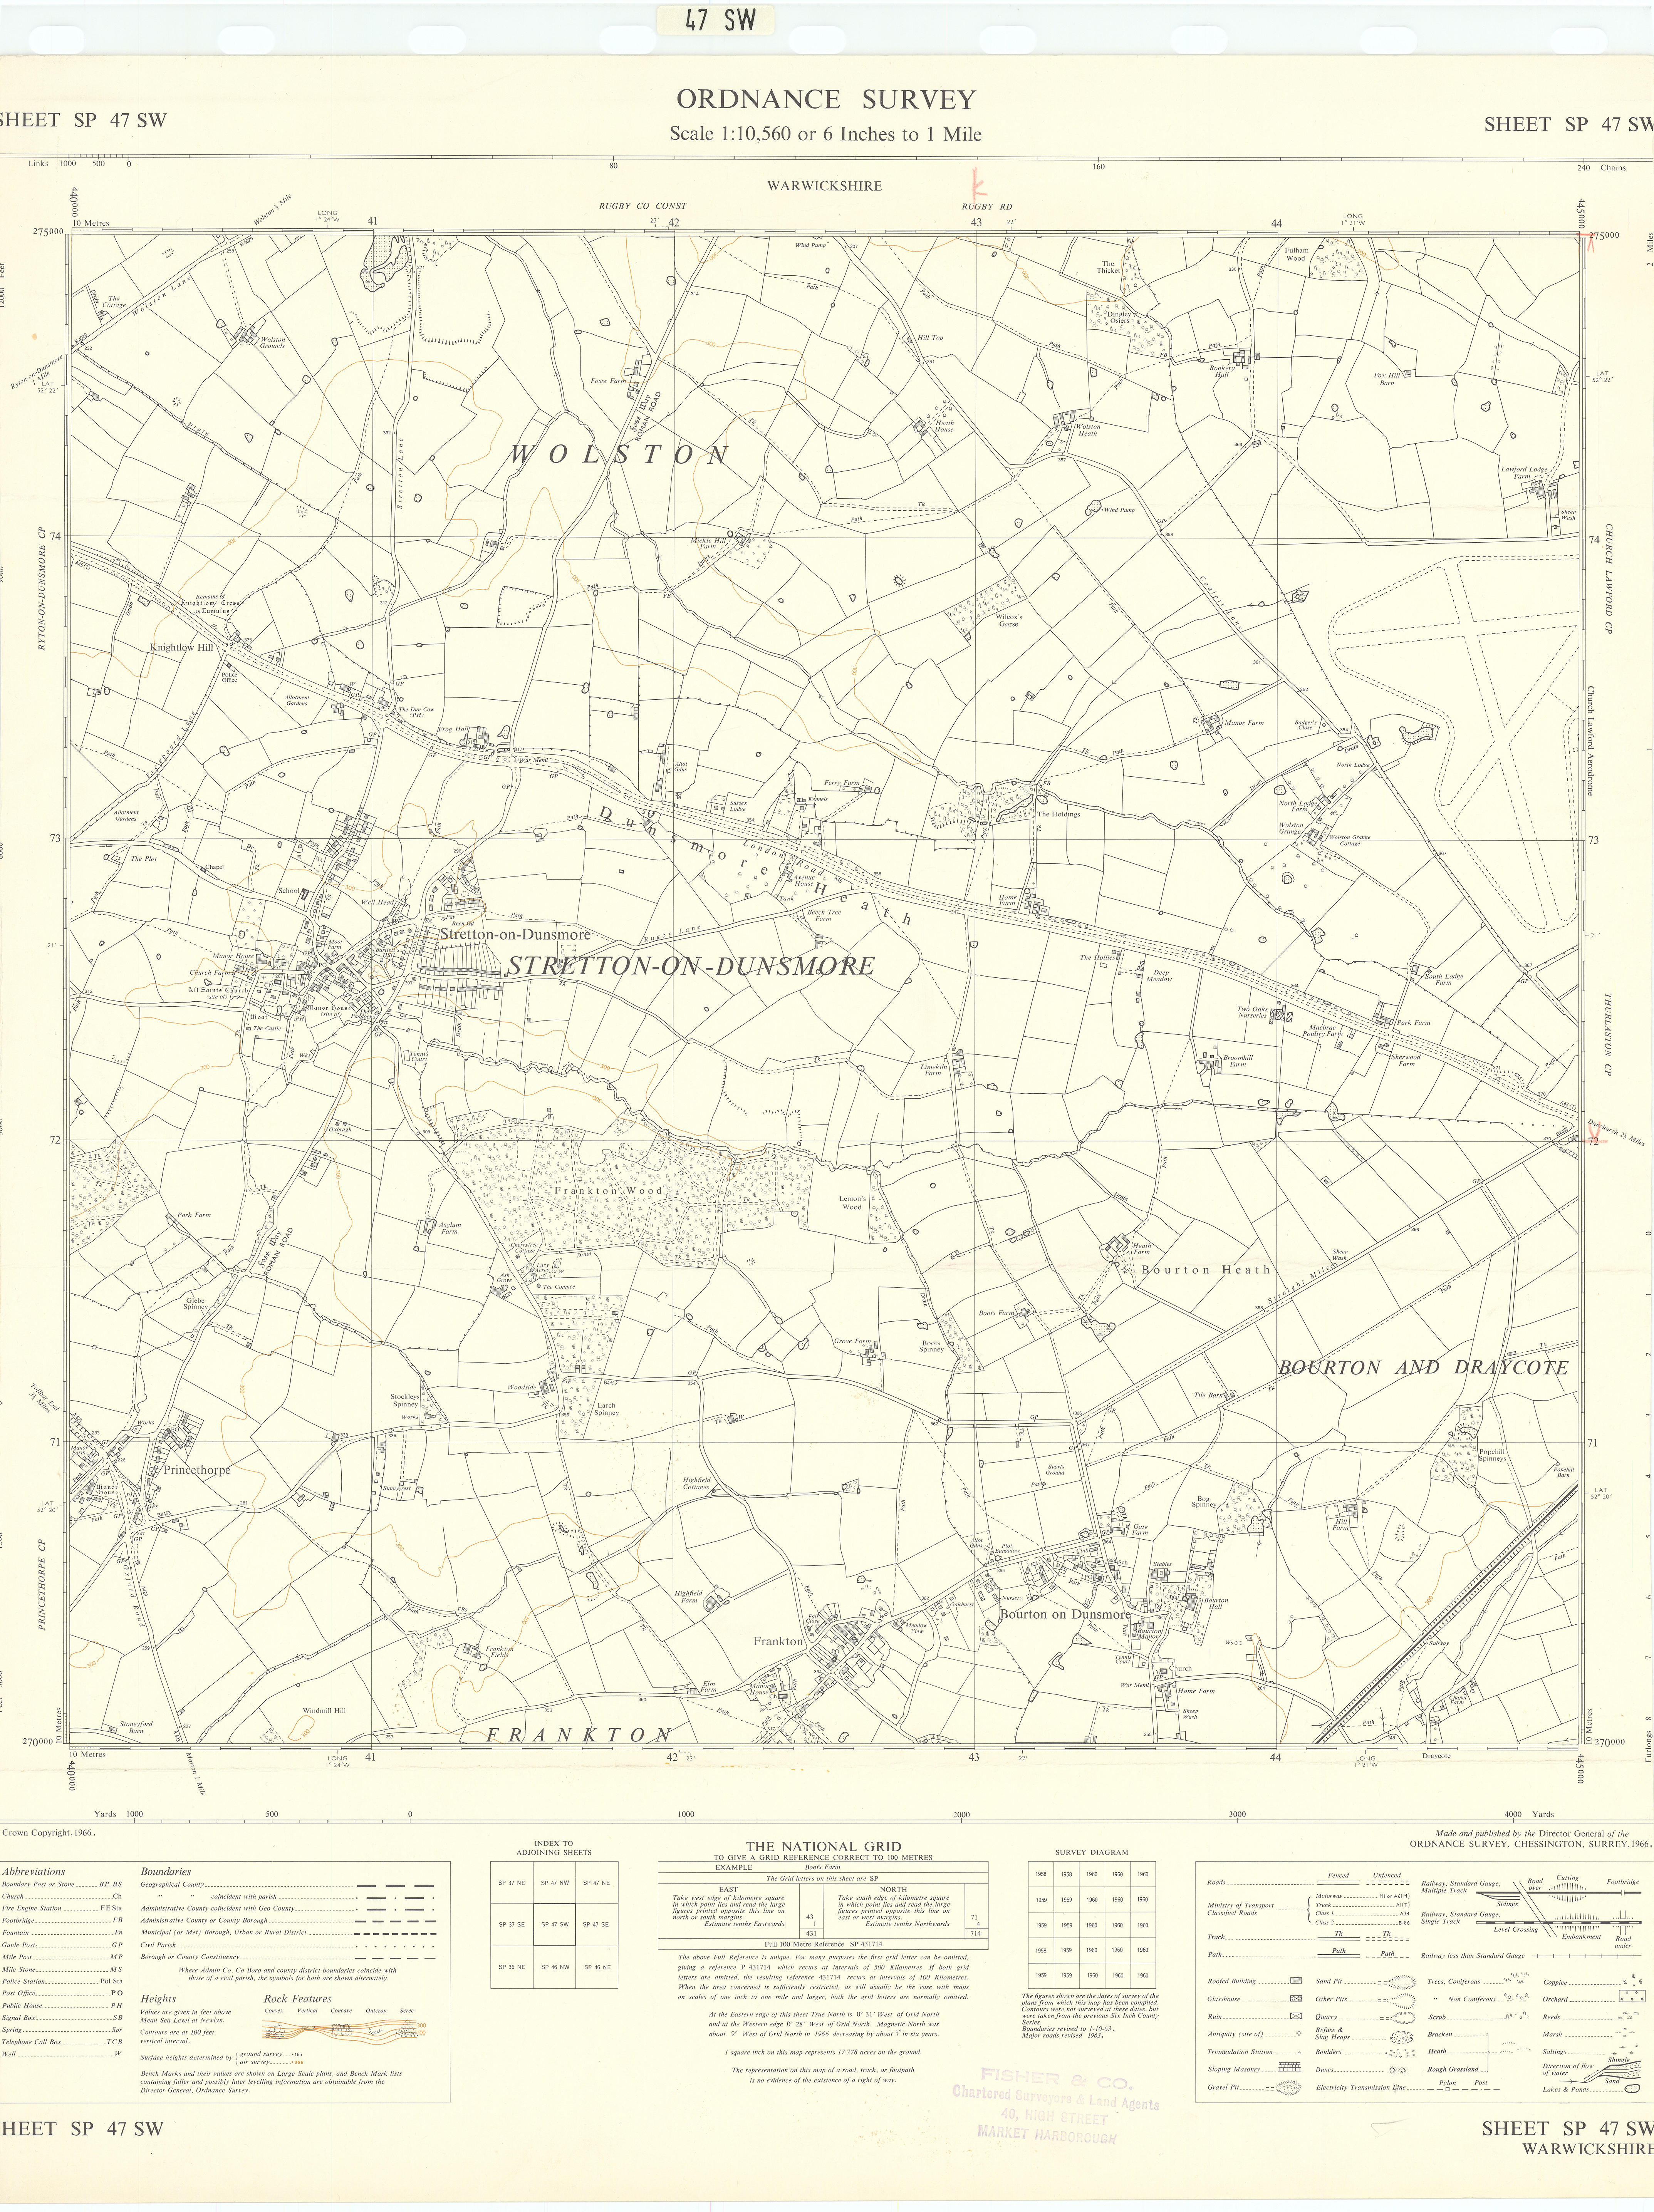 Ordnance Survey SP47SW Warks Bourton/Stretton-on-Dunsmore Frankton 1966 map